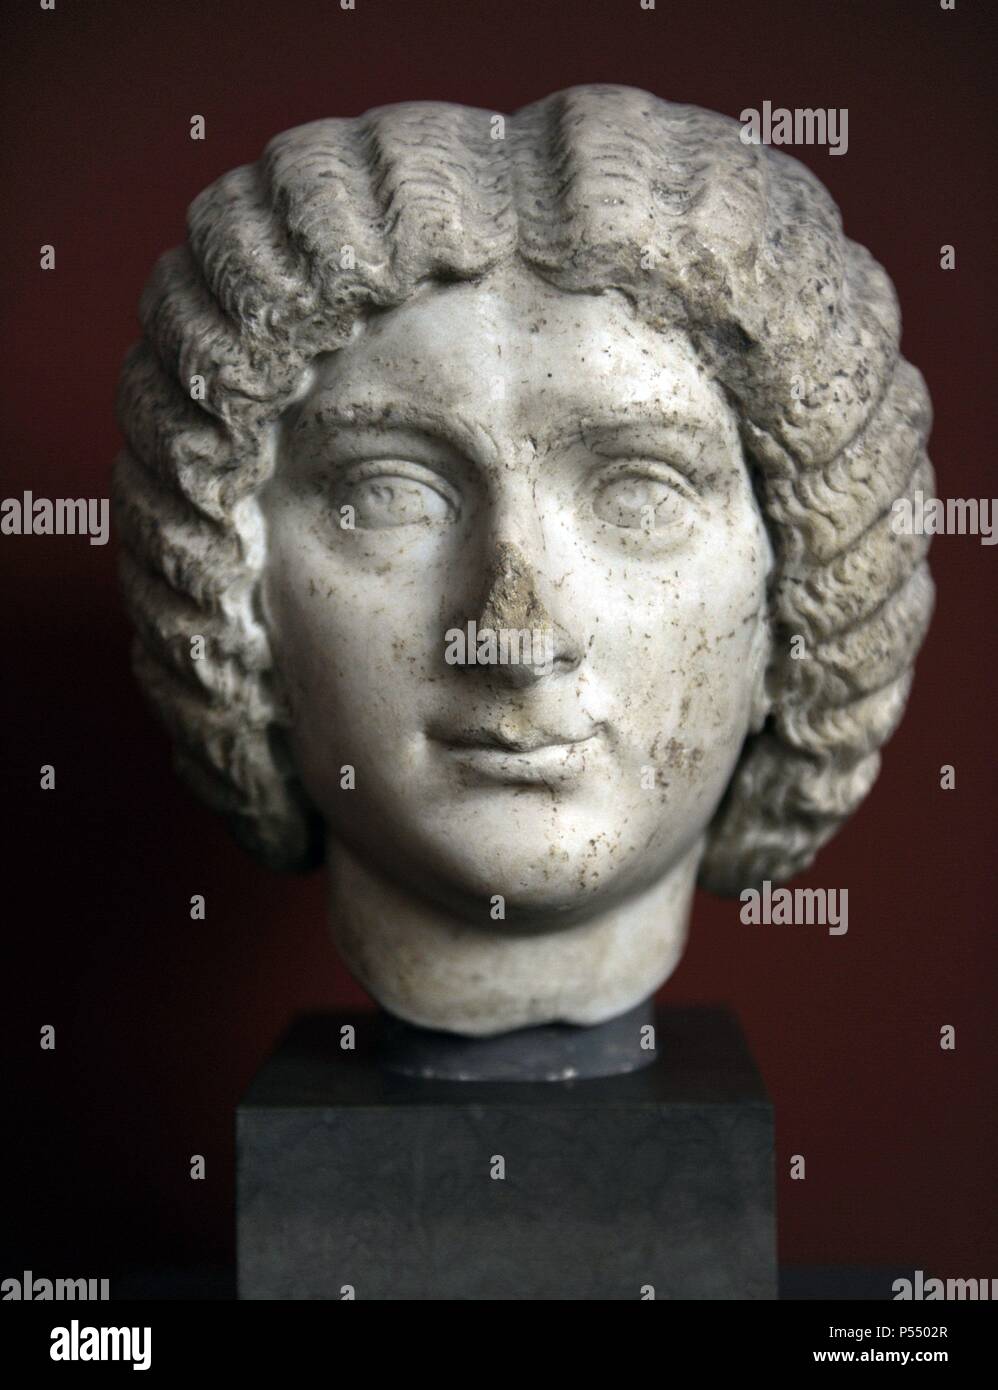 La Emperatriz Julia Domna (170-217), esposa de Septimio Severo (145-211). Busto. Mármol. C. 193 A.D. Carlsberg Glyptotek Museum. Copenhague. Dinamarca. Foto de stock